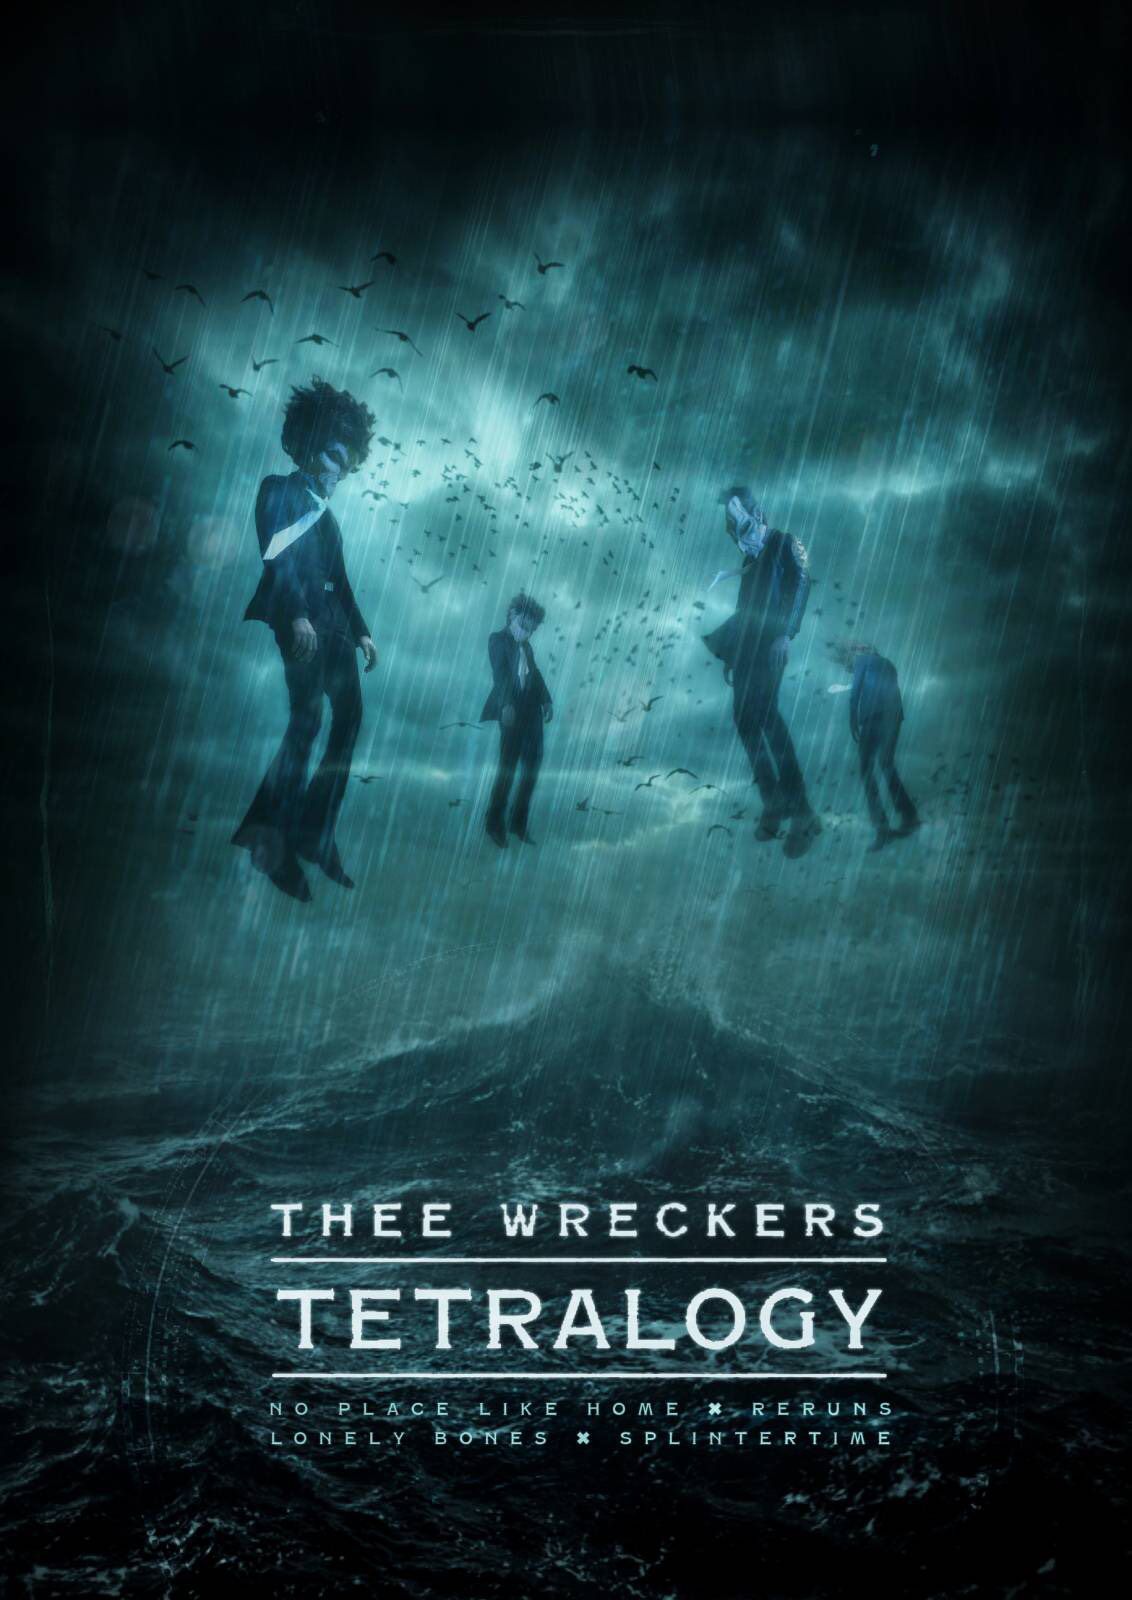 Thee wreckers tetralogy - un trip rock de rosto - Long-métrage d'animation (2020)